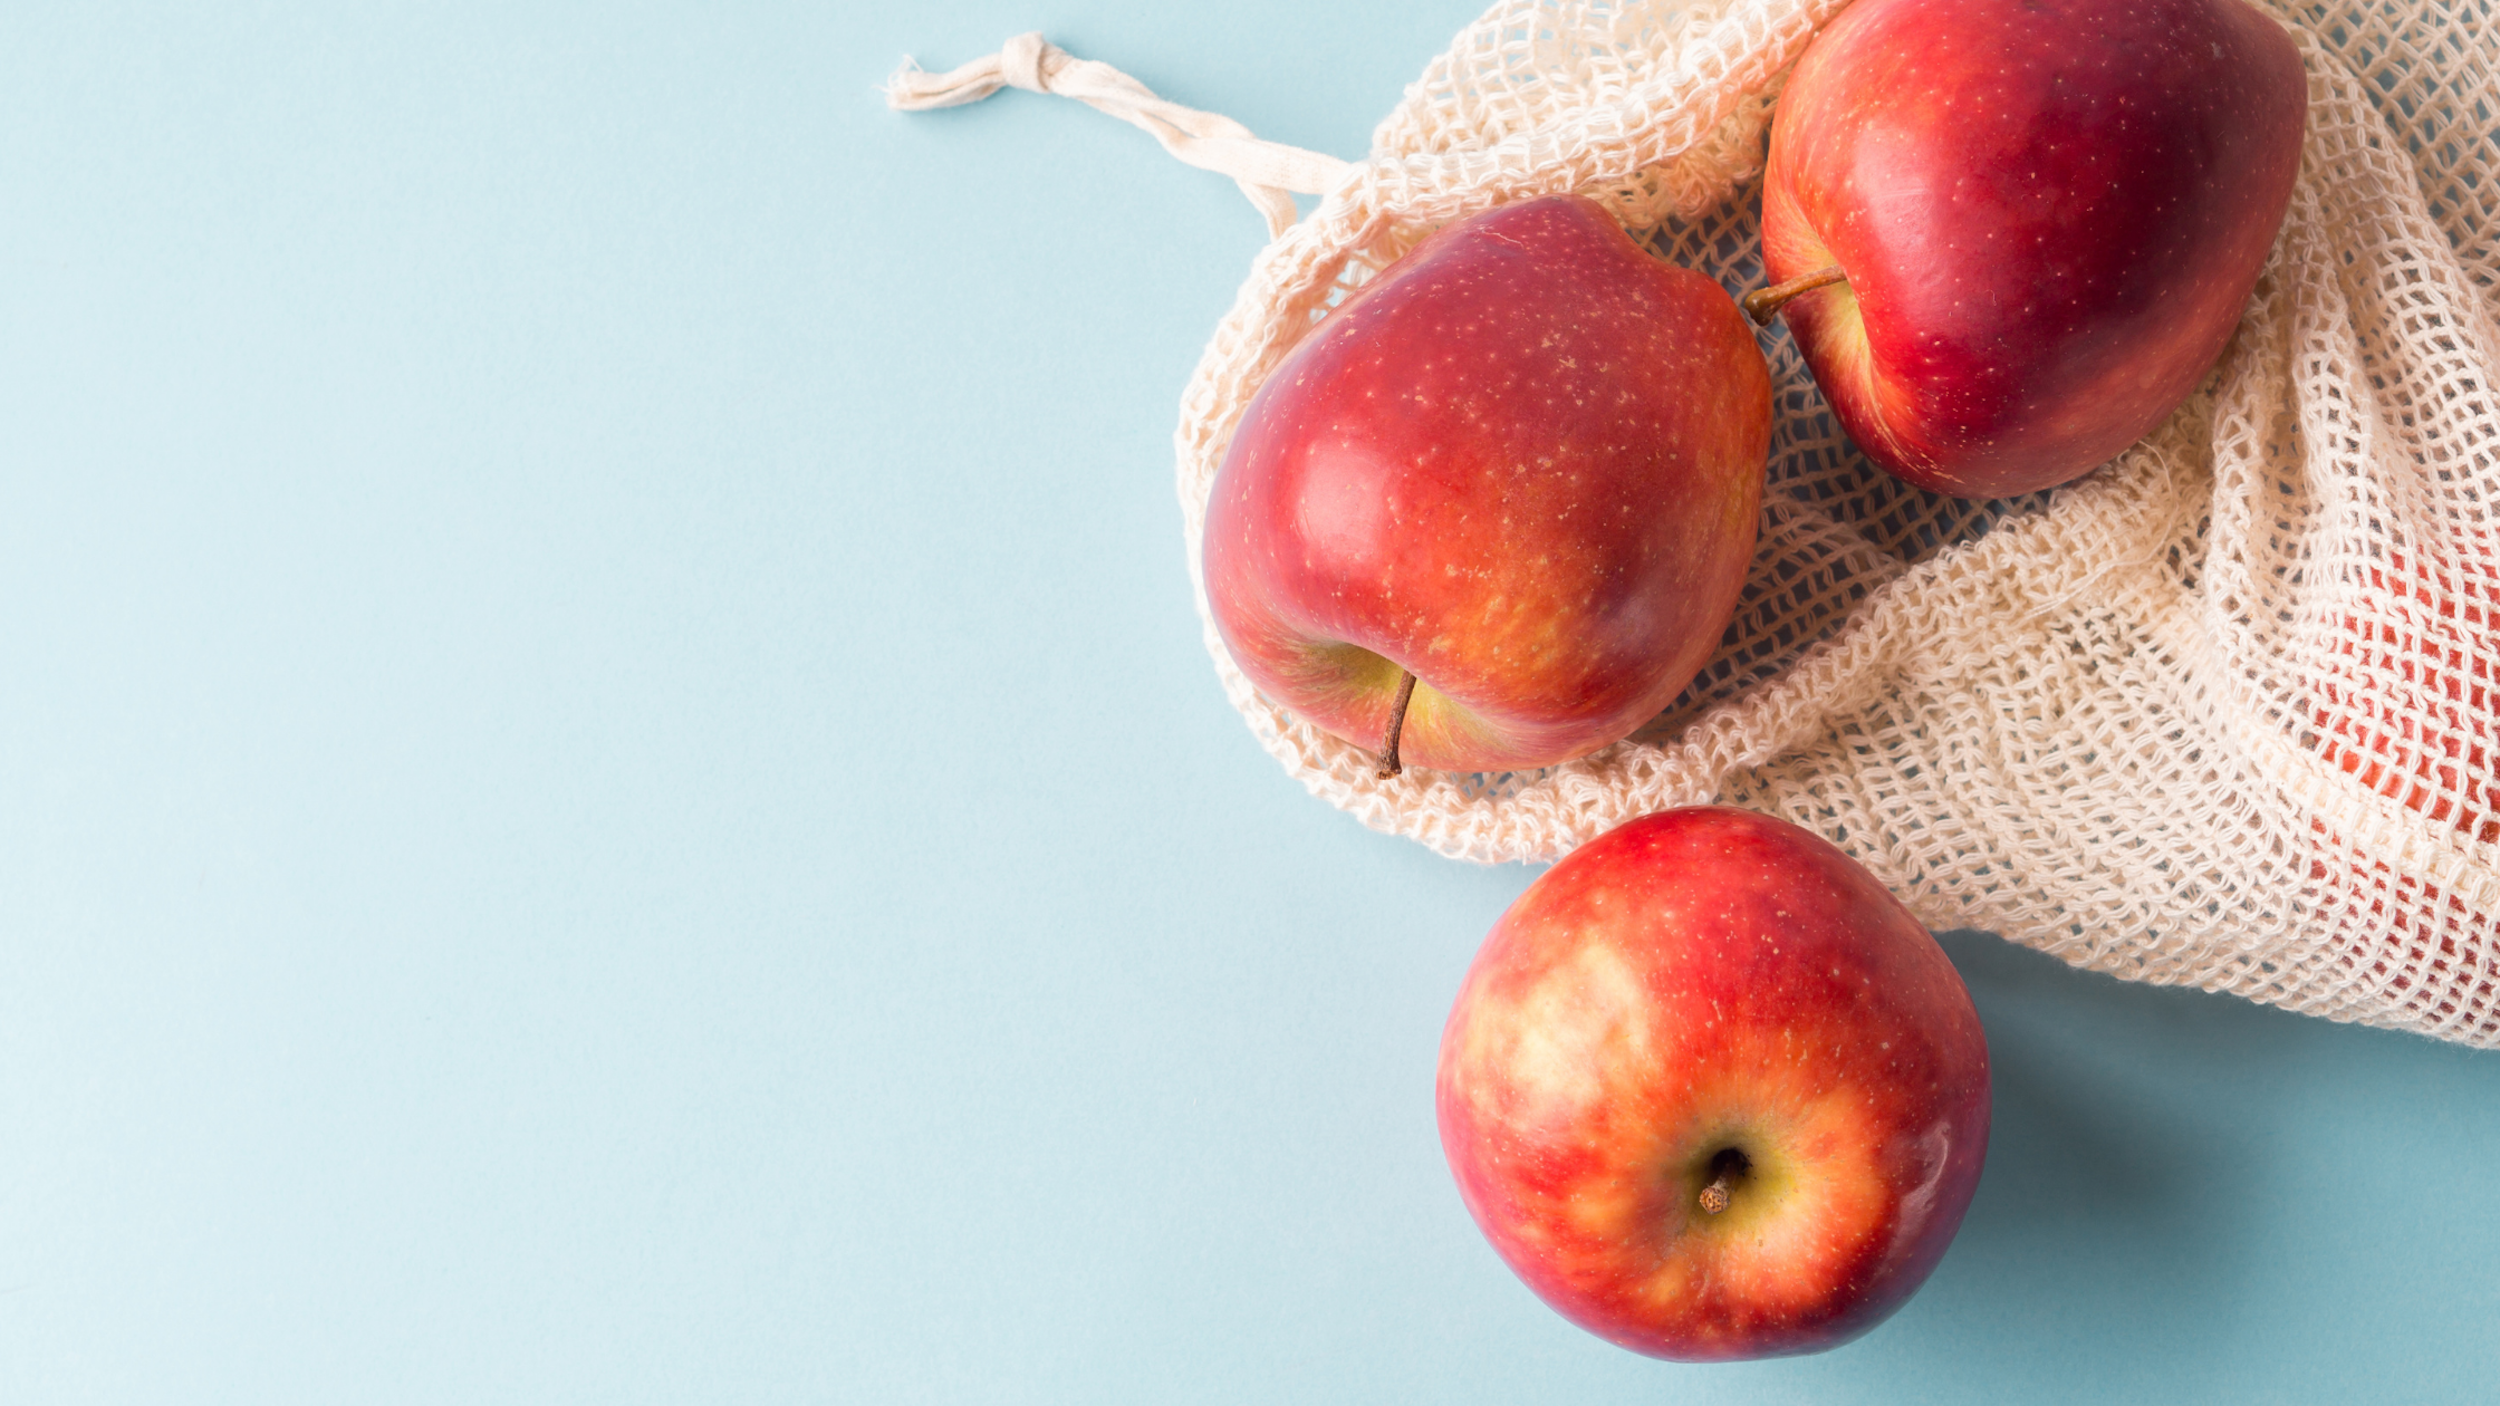 apples-health-benefits